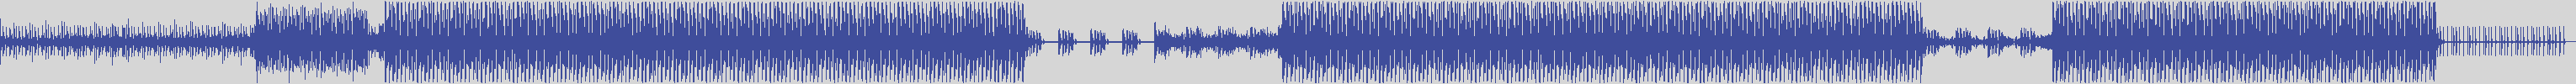 nf_boyz_records [NFY057] Gary Garo - Tell Me Why Dear [Original Mix] audio wave form